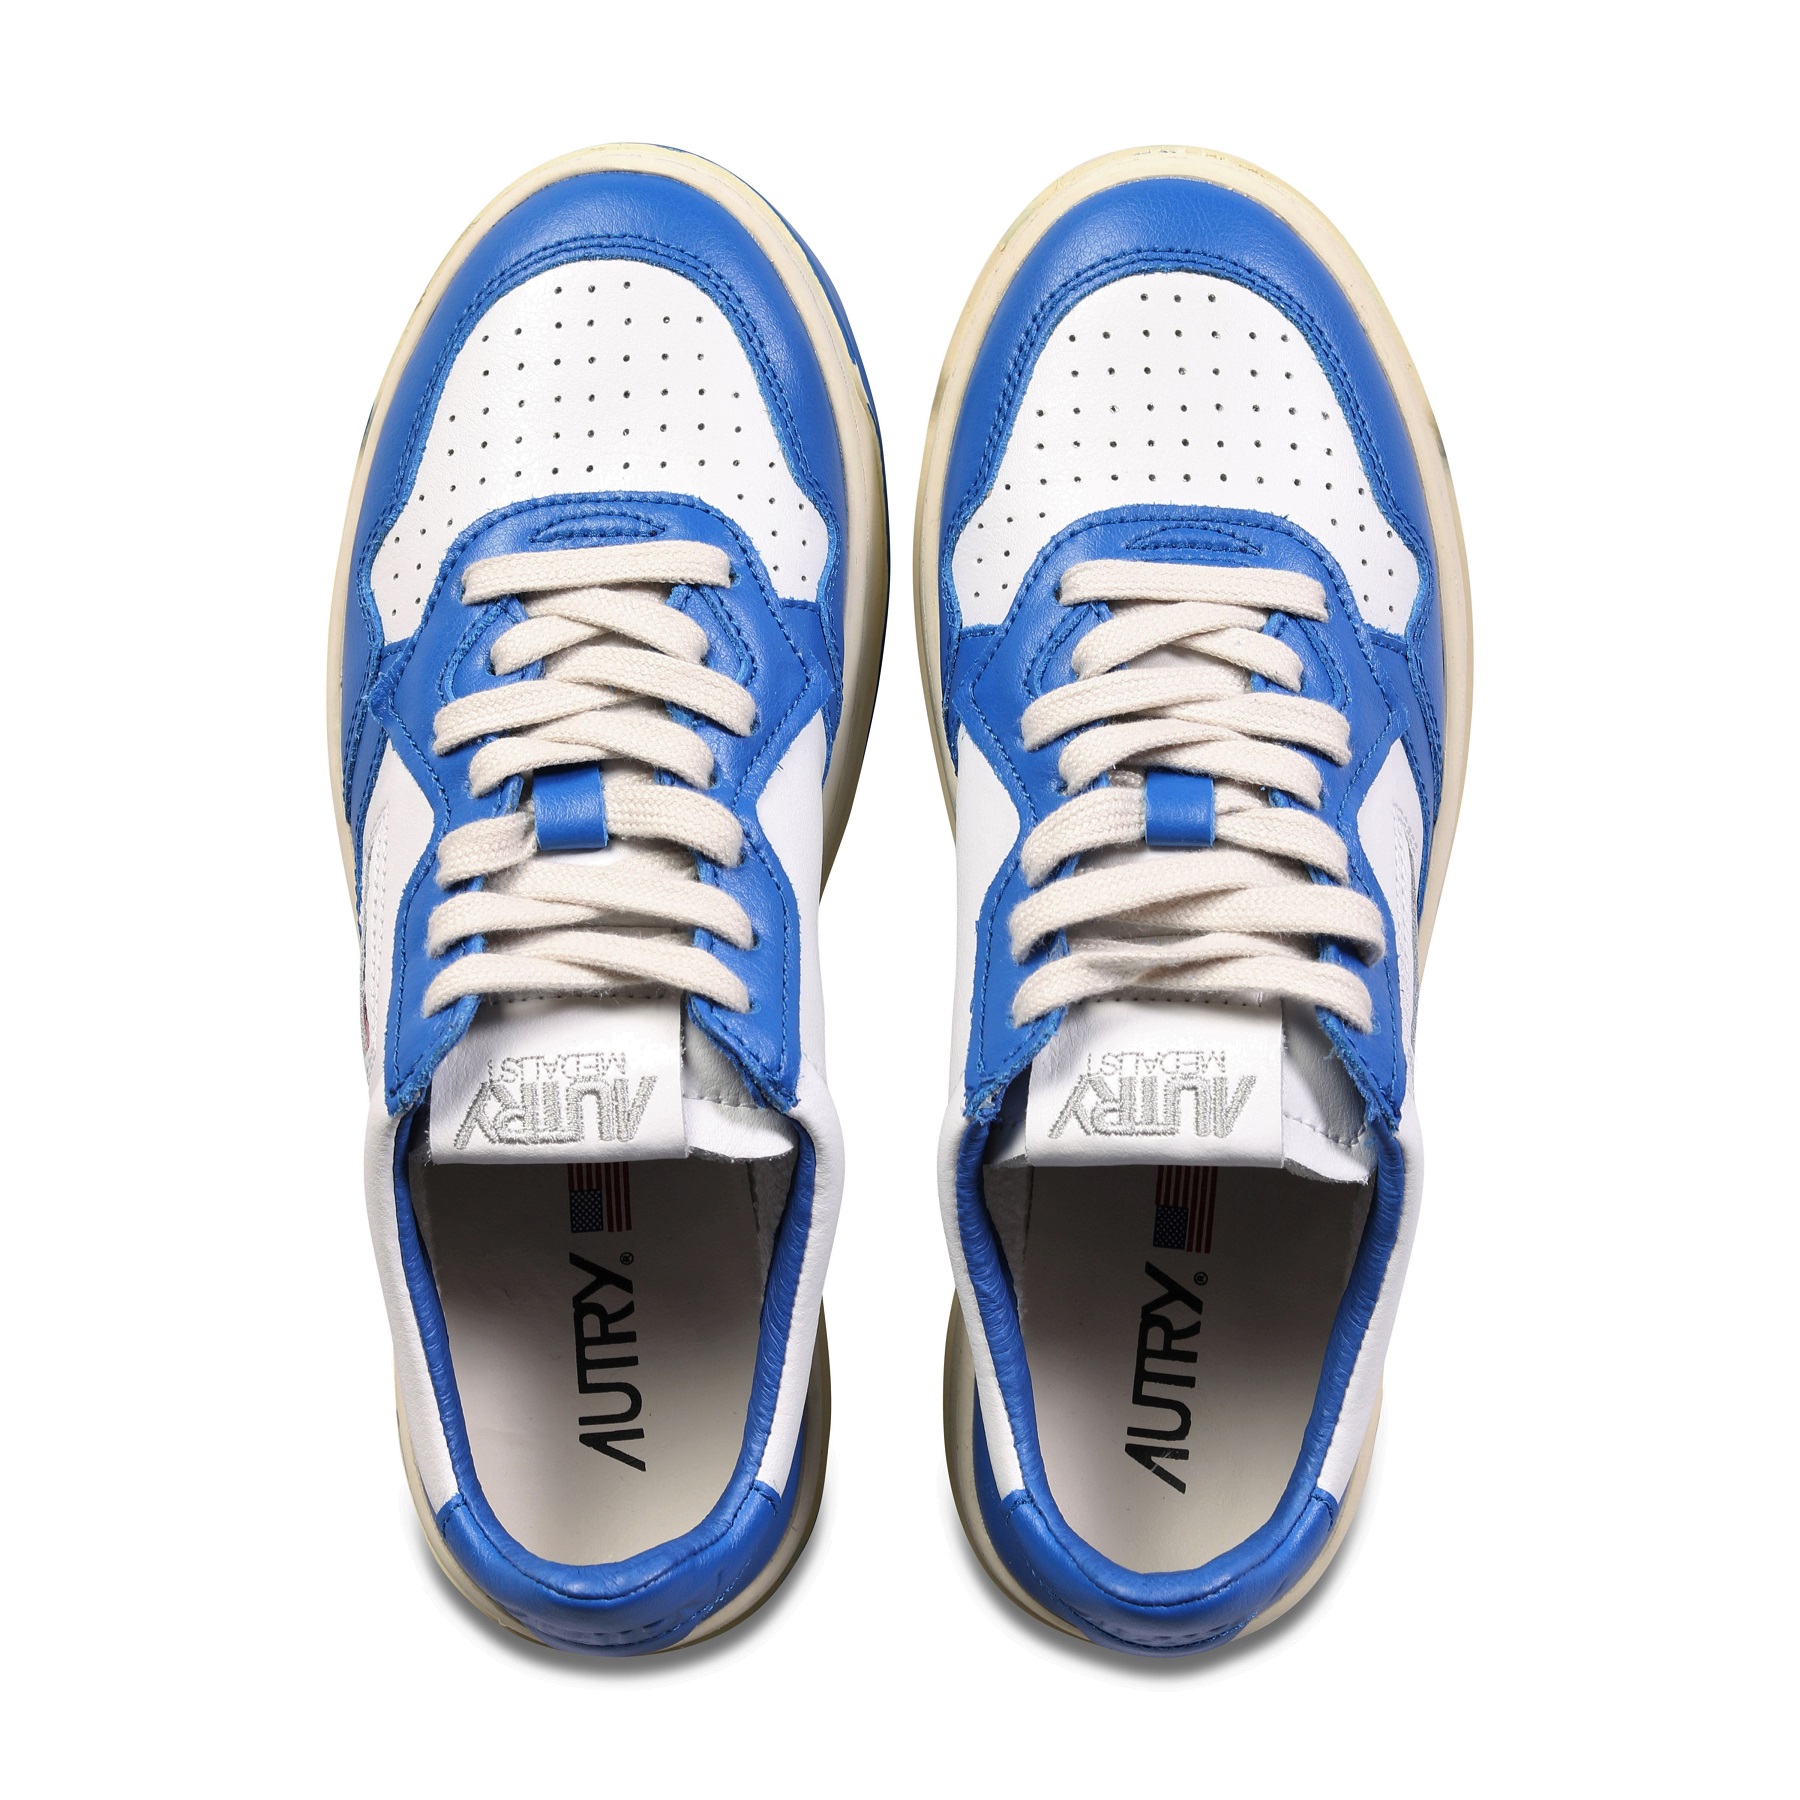 Autry Action Shoes Low Sneaker White/Princess Blue